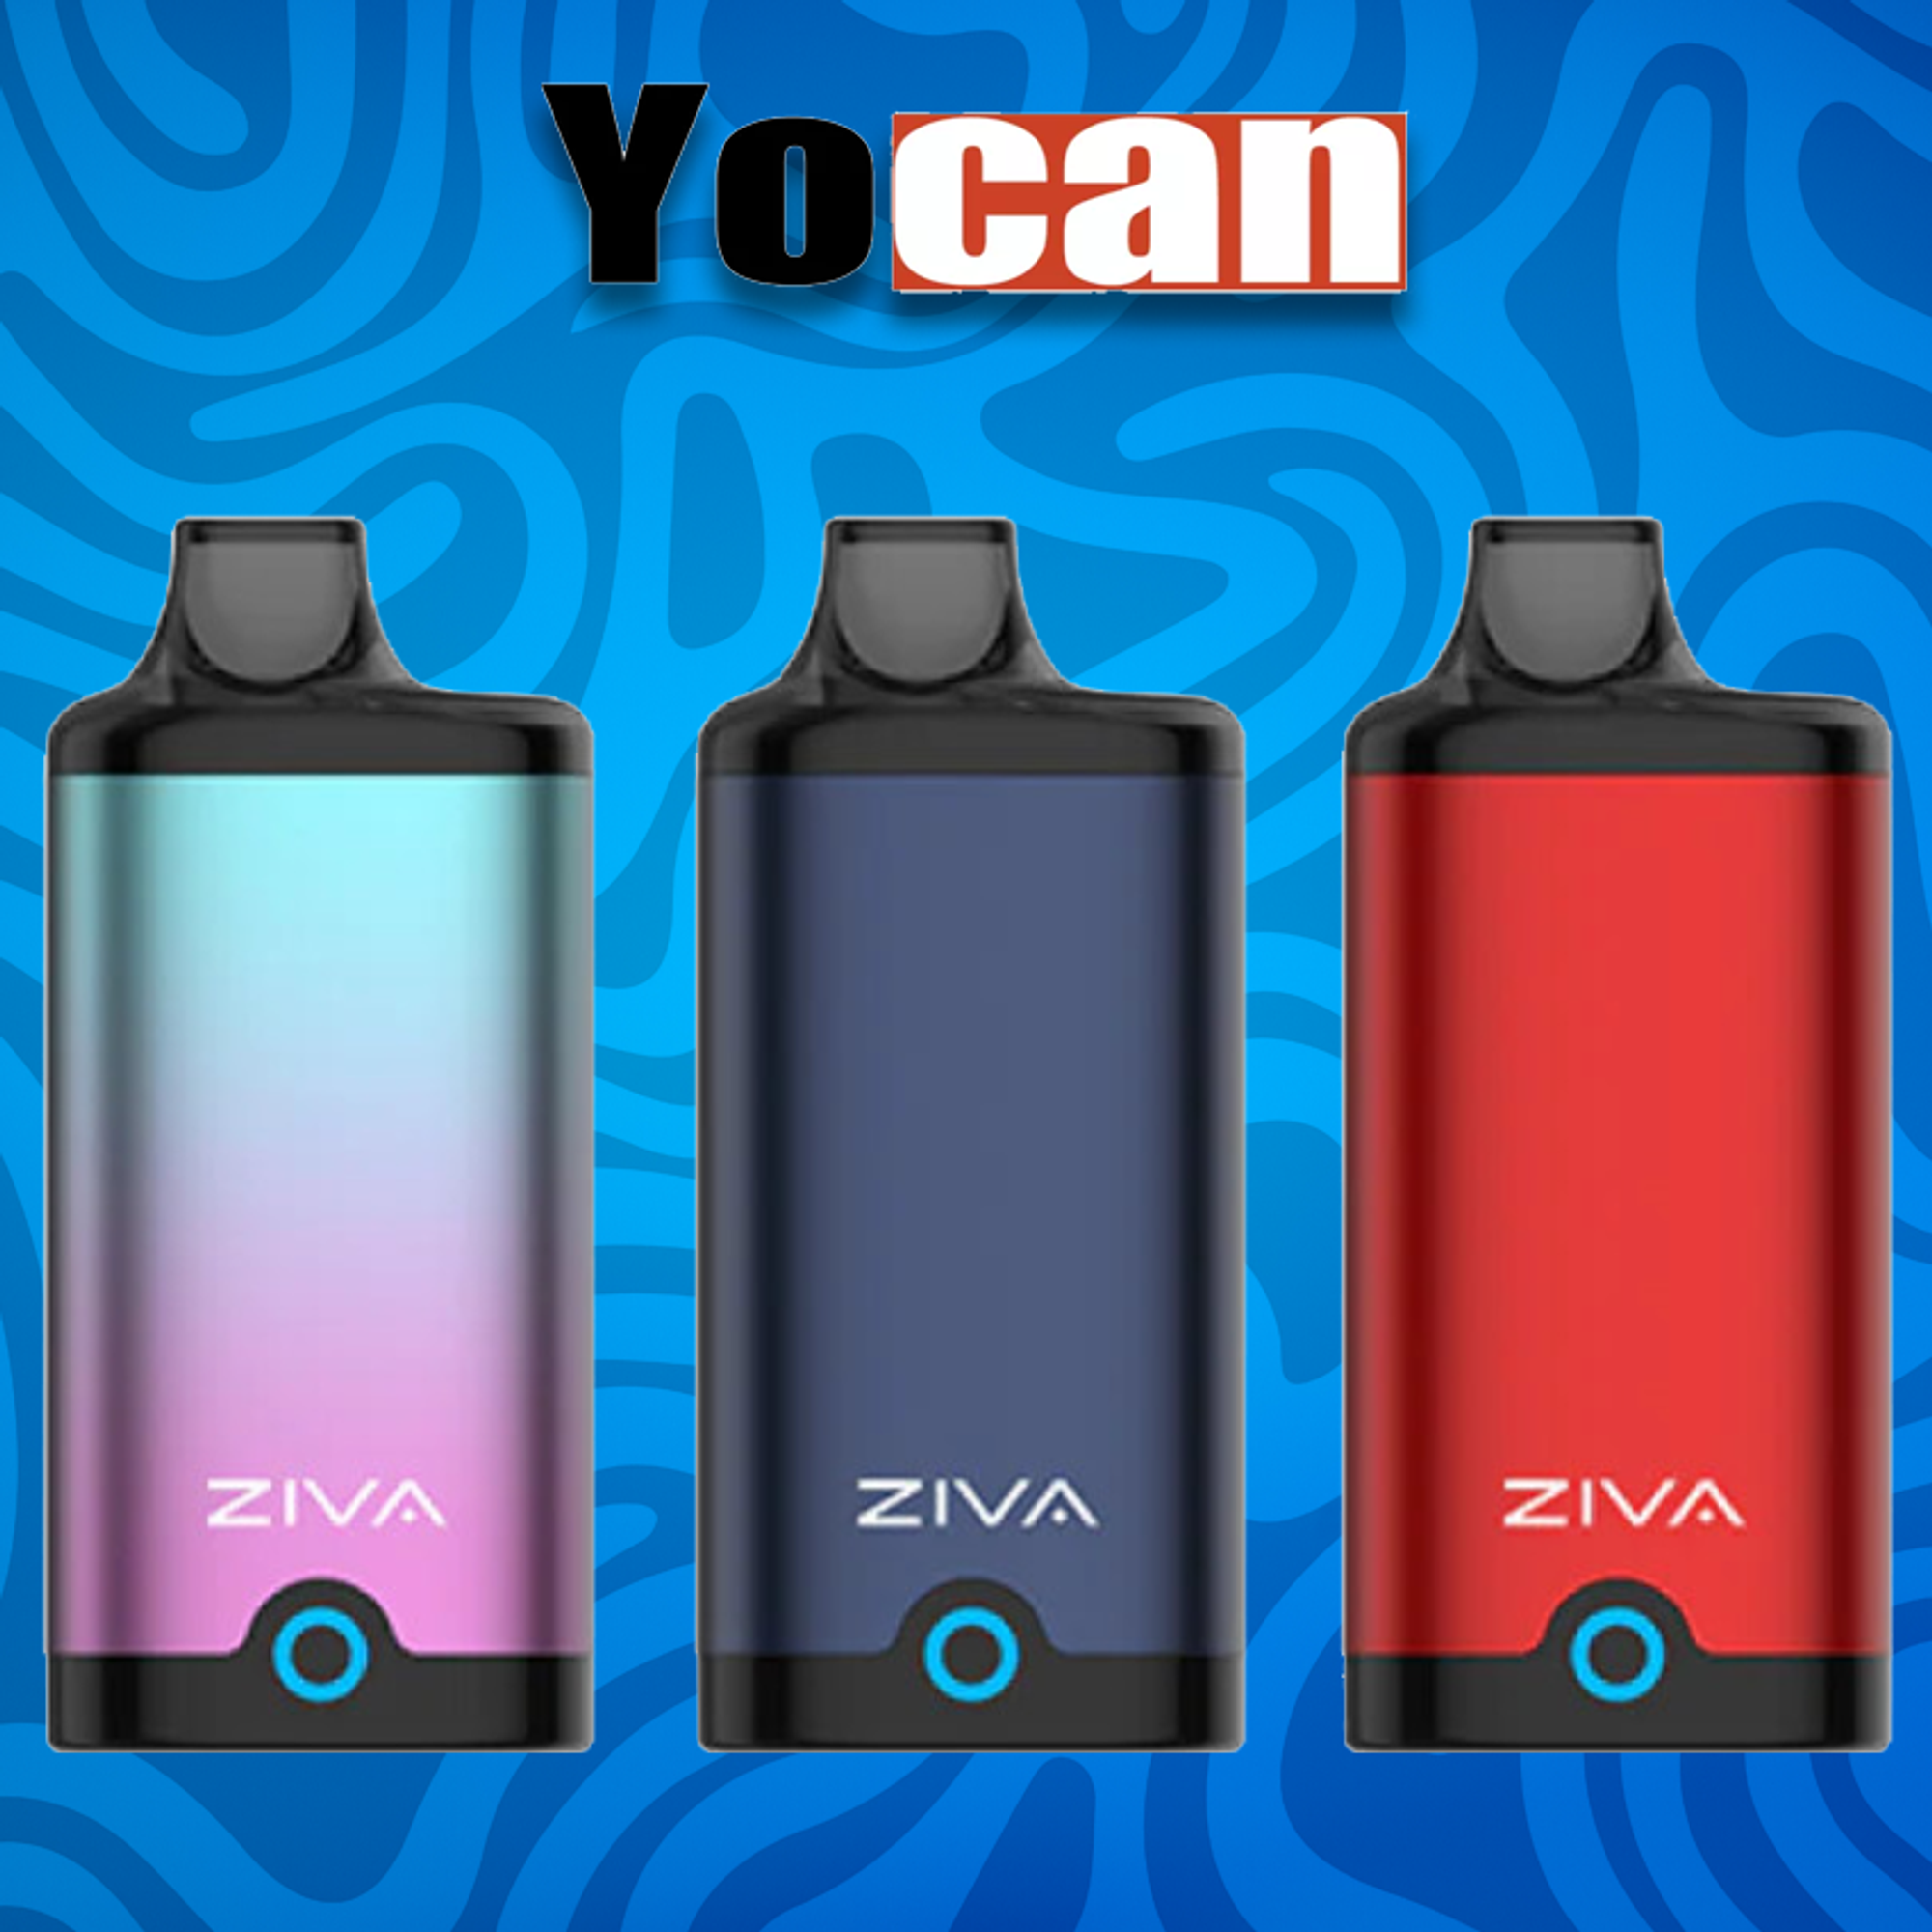 Yocan Ziva Smart Vaporizer Mod for Sale